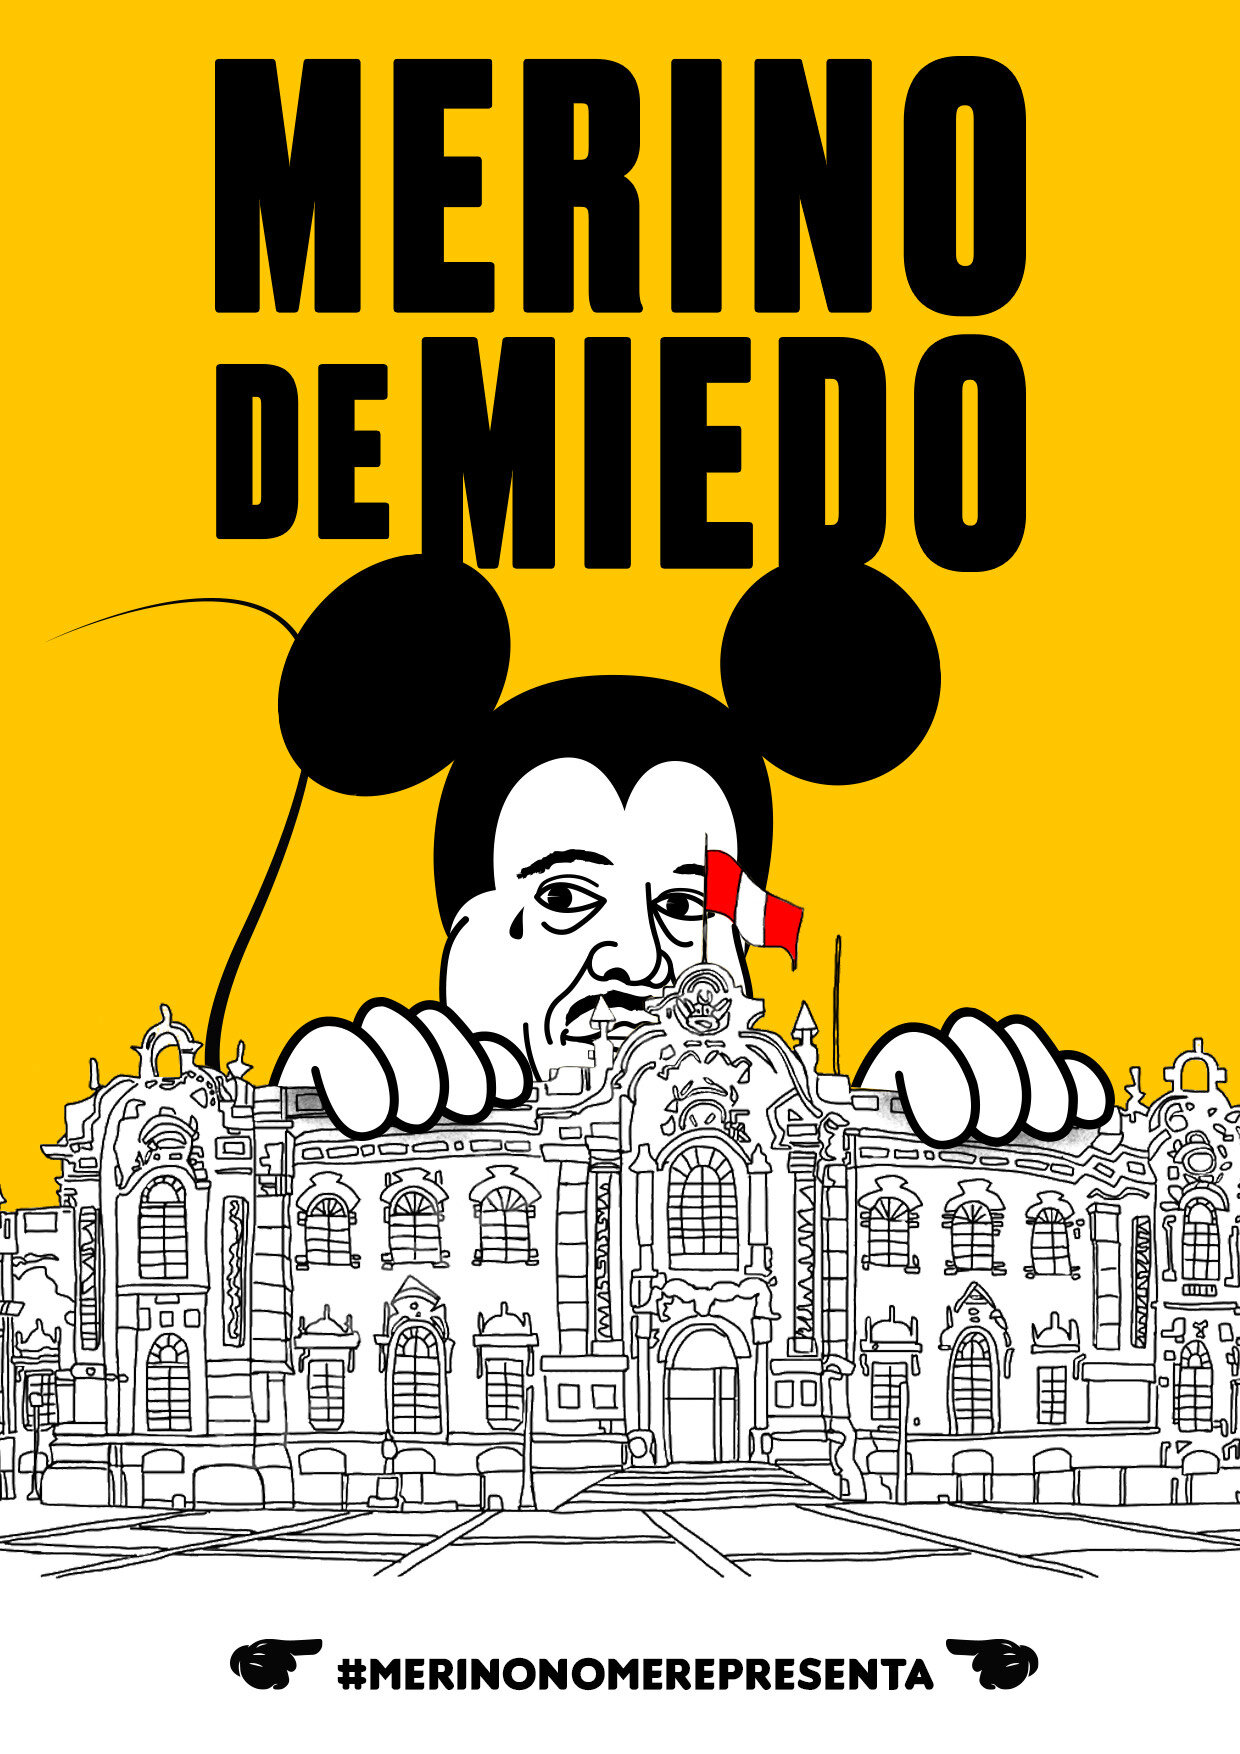  Graphic art ‘Merino de miedo’ (Merino of fear) by Carlos Román and Gerardo Ramos  ©Archivo Artivista Peruano 